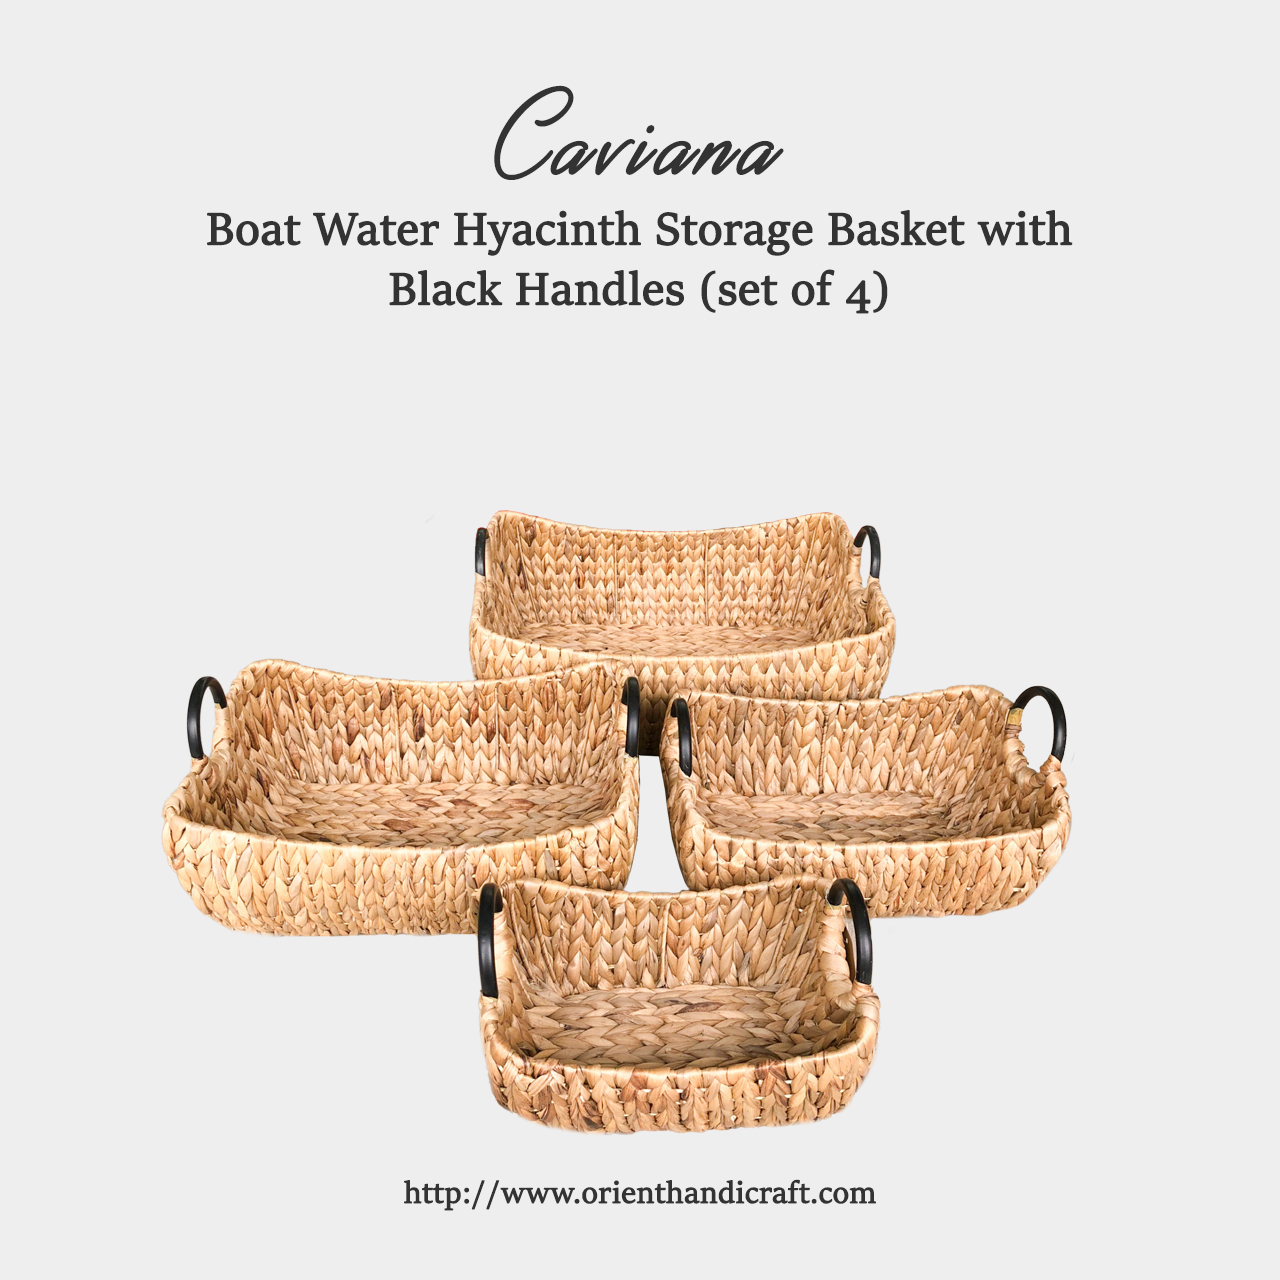 Boat Water Hyacinth Storage Basket with Black Handles